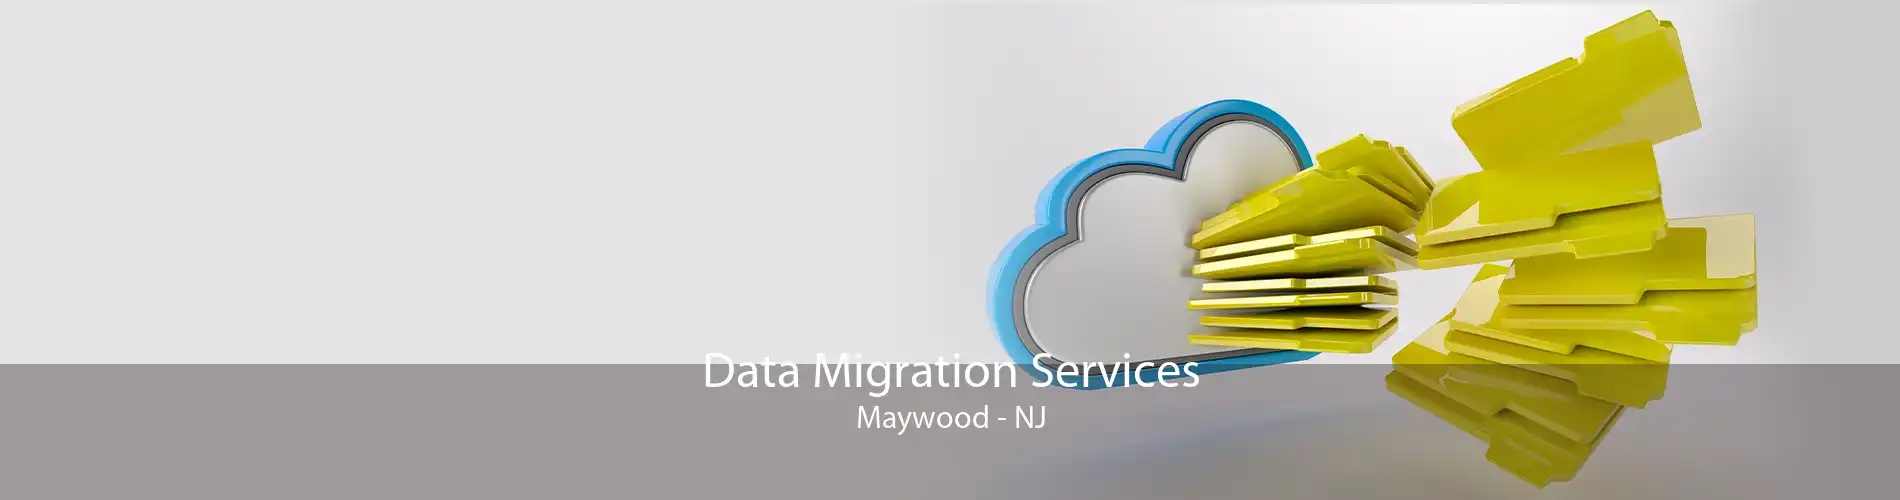 Data Migration Services Maywood - NJ